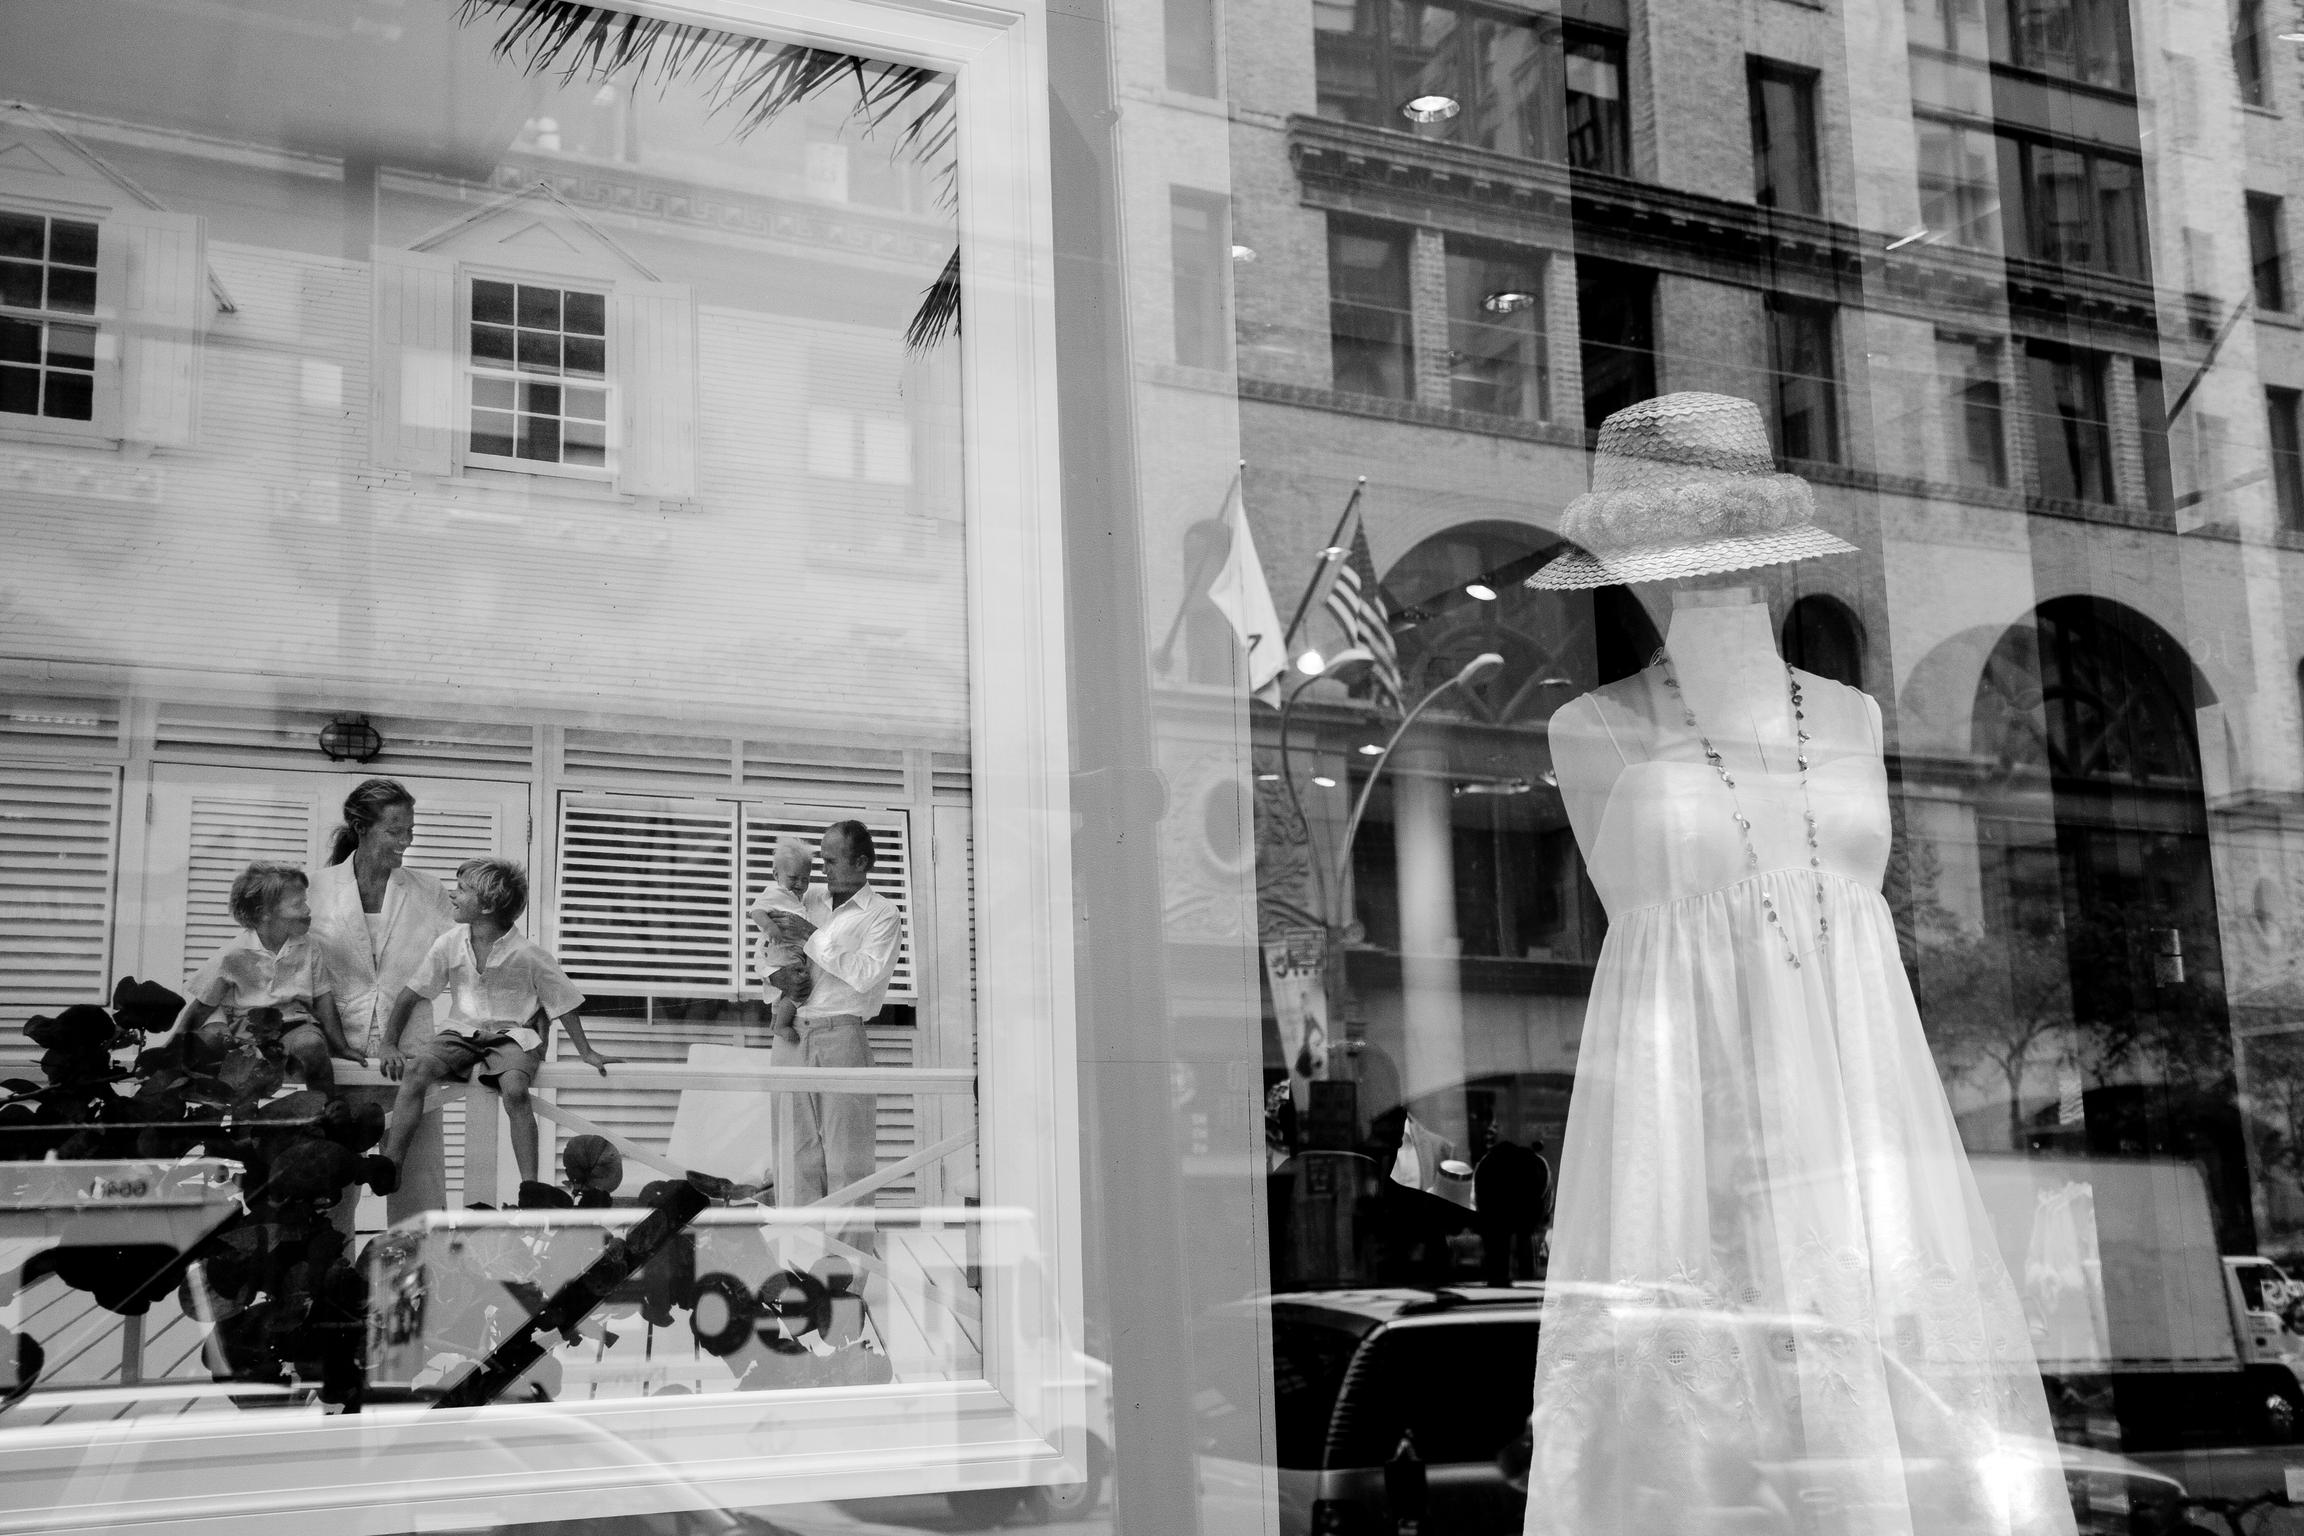 Reflection on a New York Street scene. New York USA